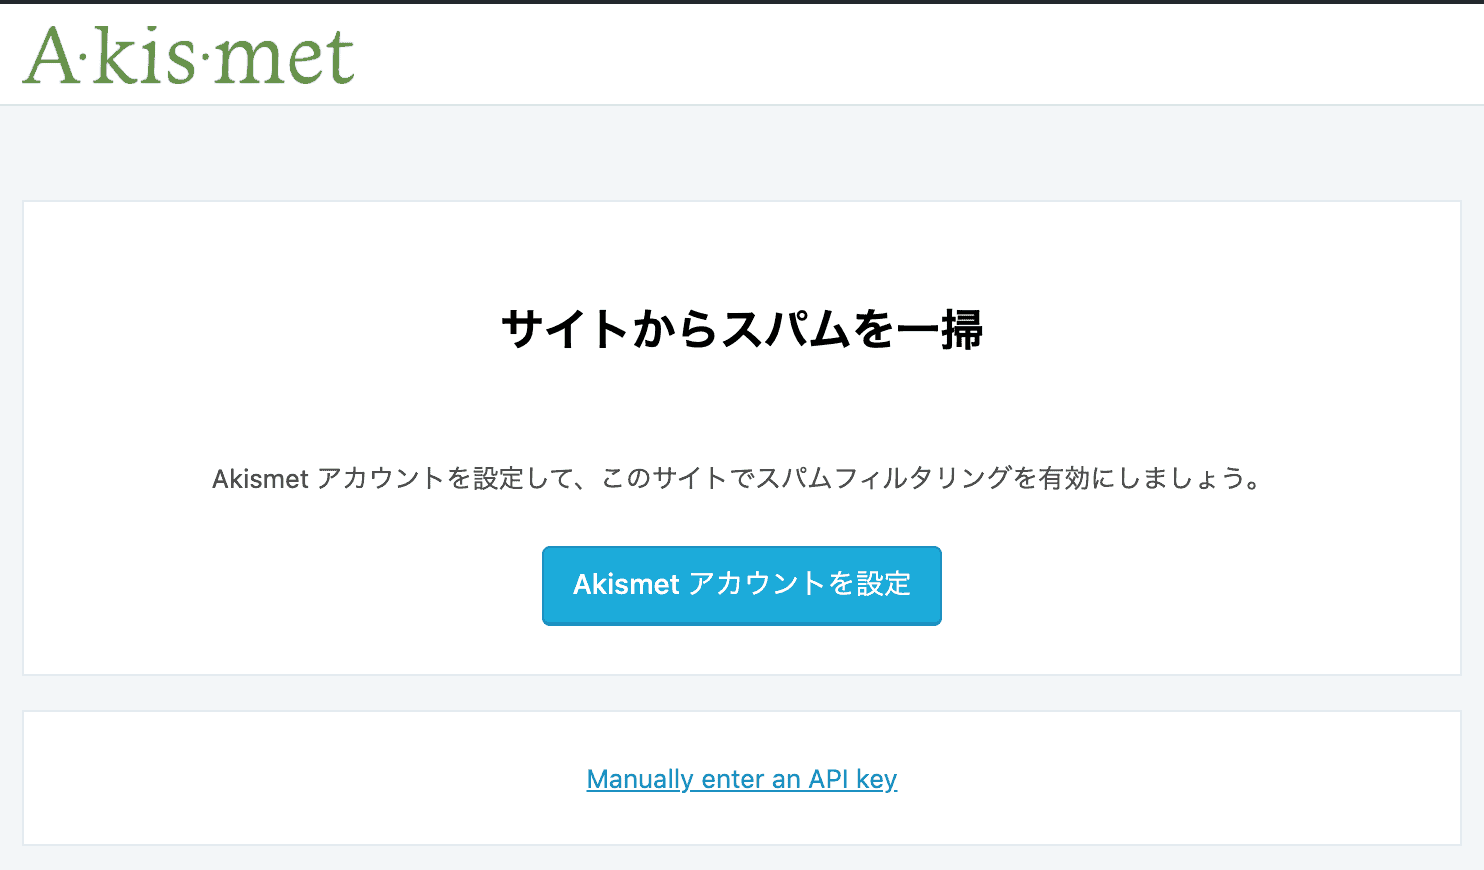 akismet-manually-enter-an-API-key